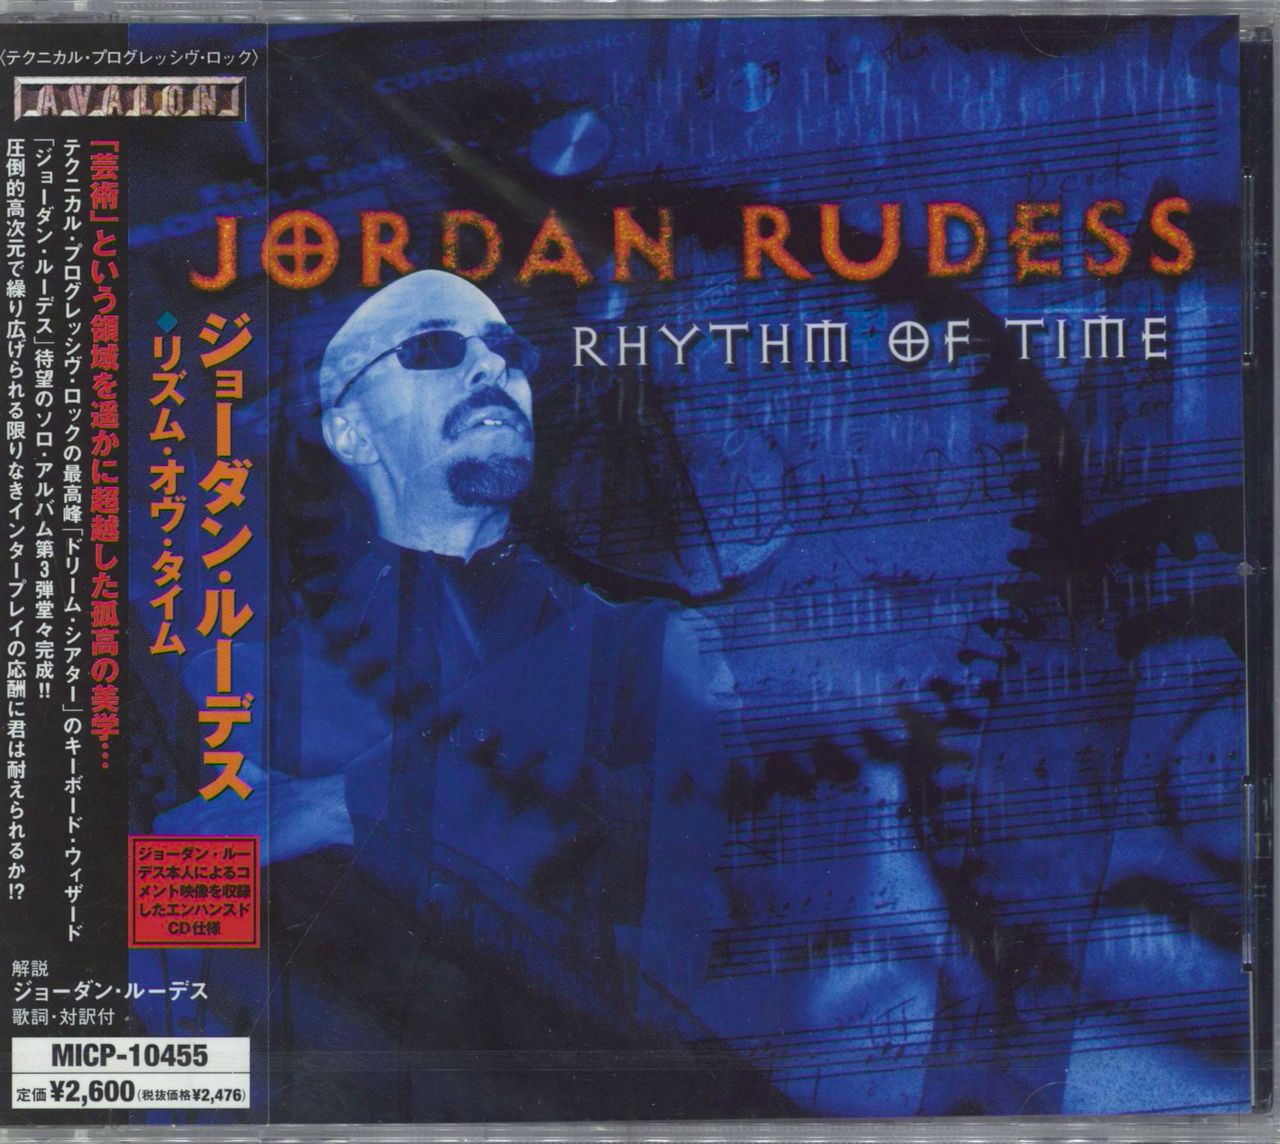 Jordan Rudess Rhythm Of Time - Sealed Japanese Promo CD album (CDLP) MICP-10455